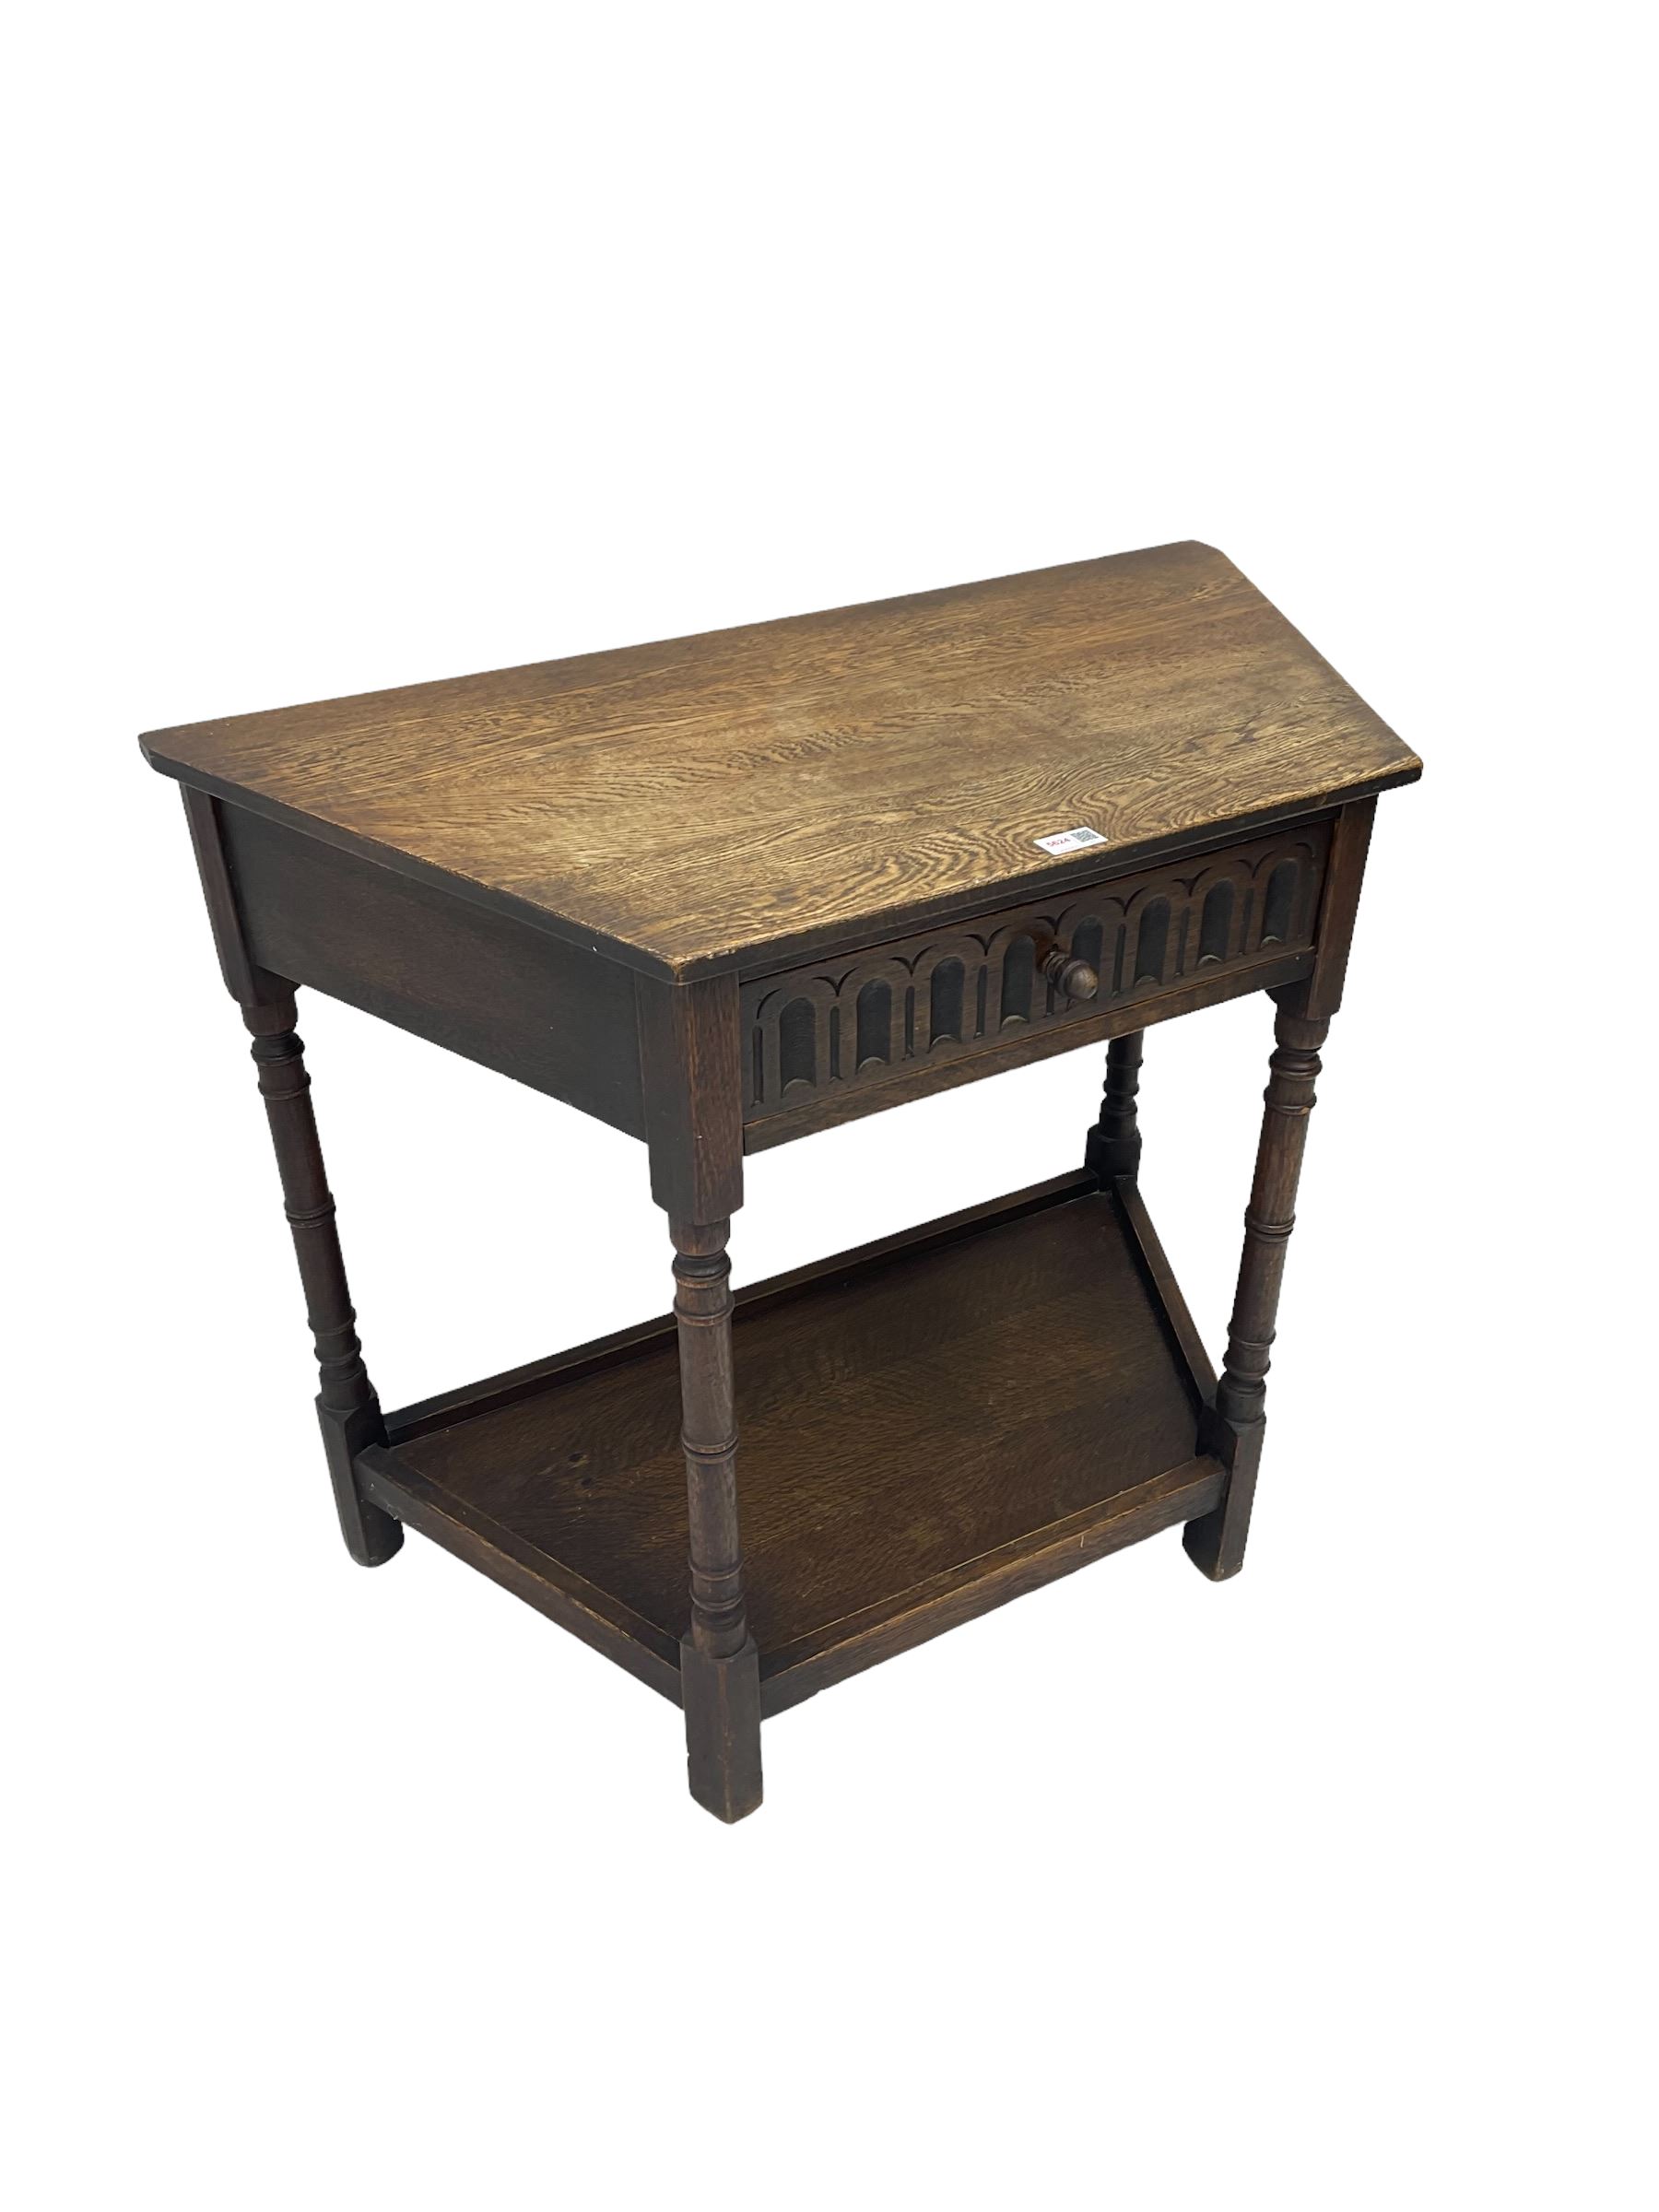 Oak side table - Image 6 of 6